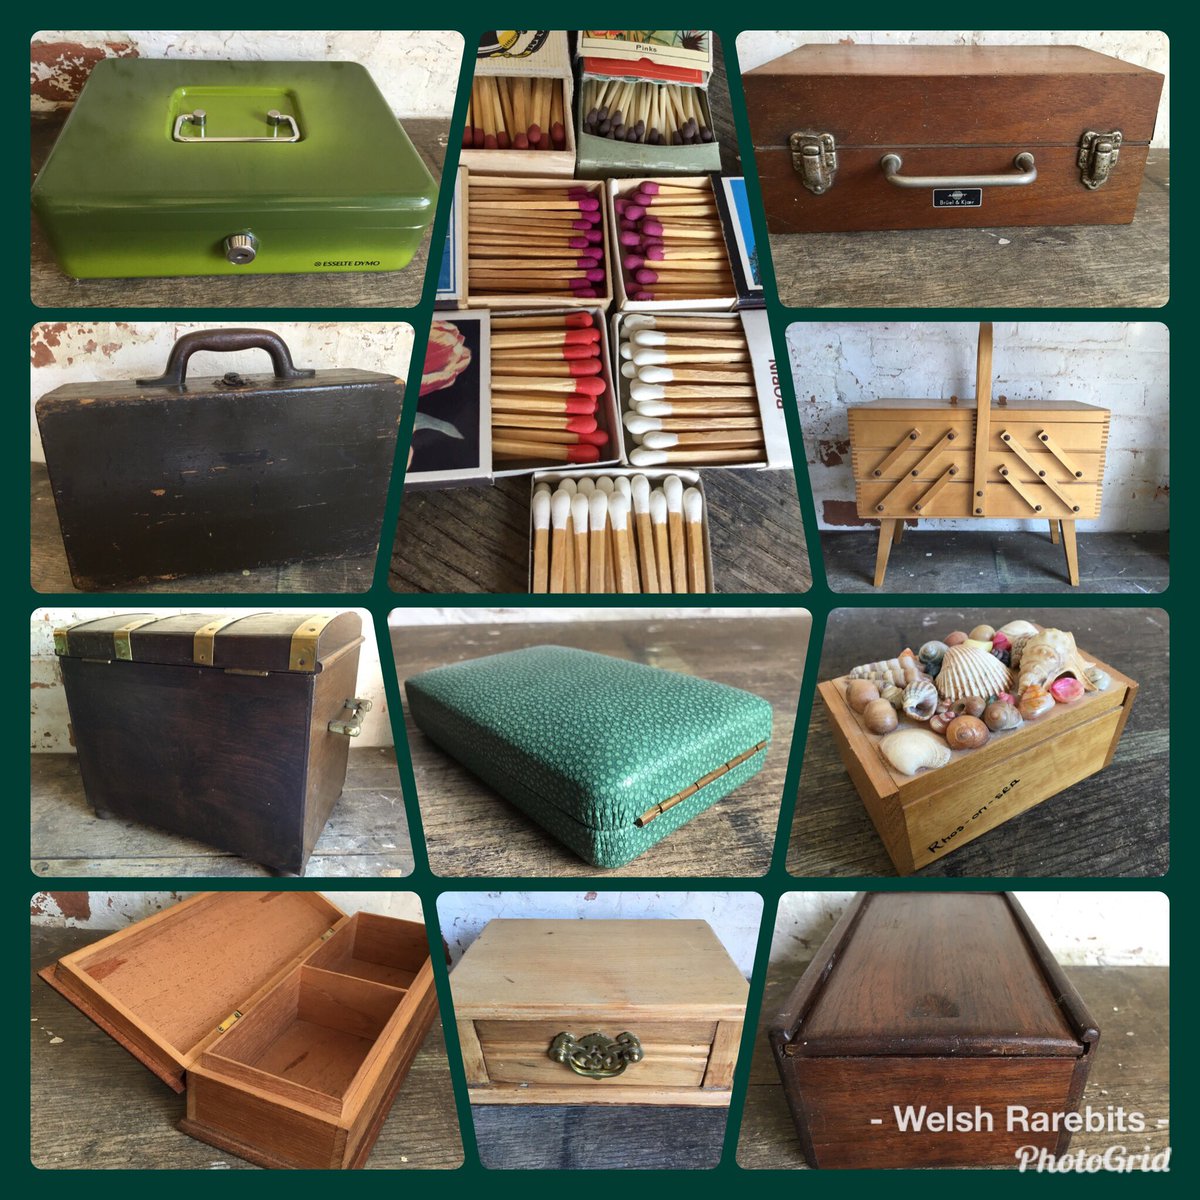 Shop online at stores.ebay.co.uk/Welsh-Rarebits… 
#tables #bookshelves #linencupboard #chestofdrawers #teaset #denby #gingerjar #cashtin #sewingbox #trinket #jewellerybox #furniture #antiques #collectables #sale